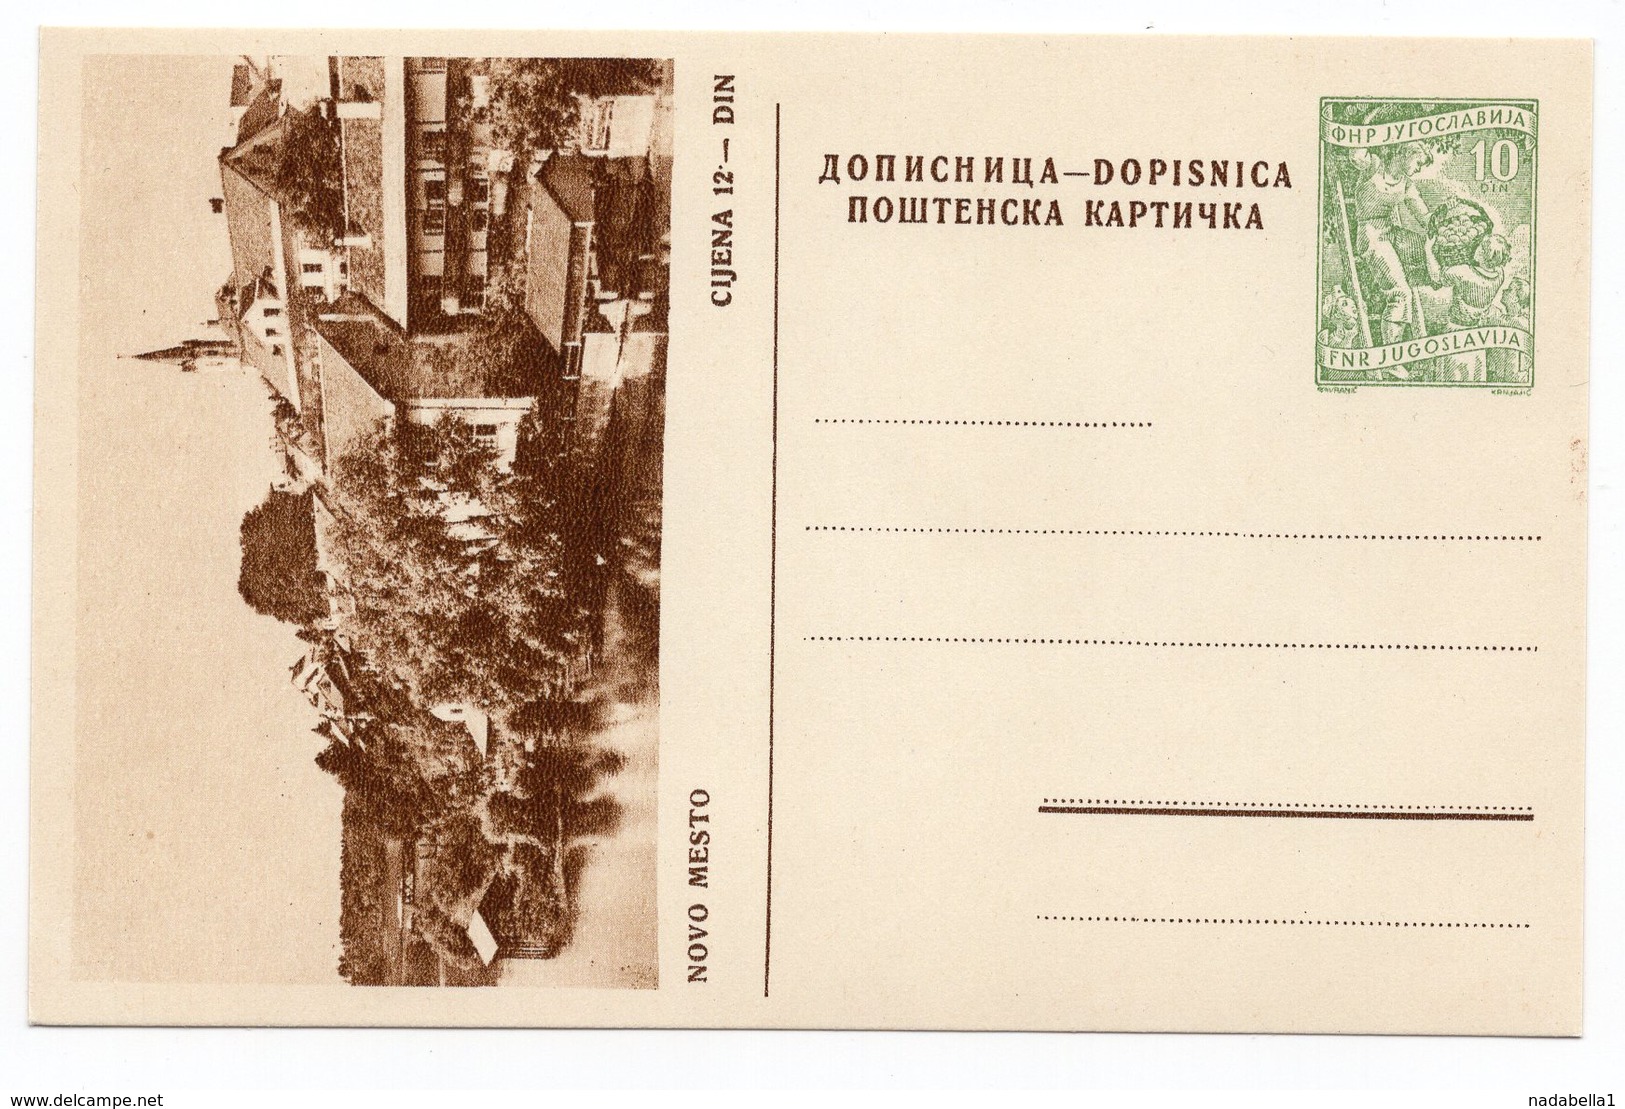 1956, NOVO MESTO, SLOVENIA, YUGOSLAVIA, 10 DINARA GREEN, ILLUSTRATED STATIONERY CARD, MINT - Postal Stationery